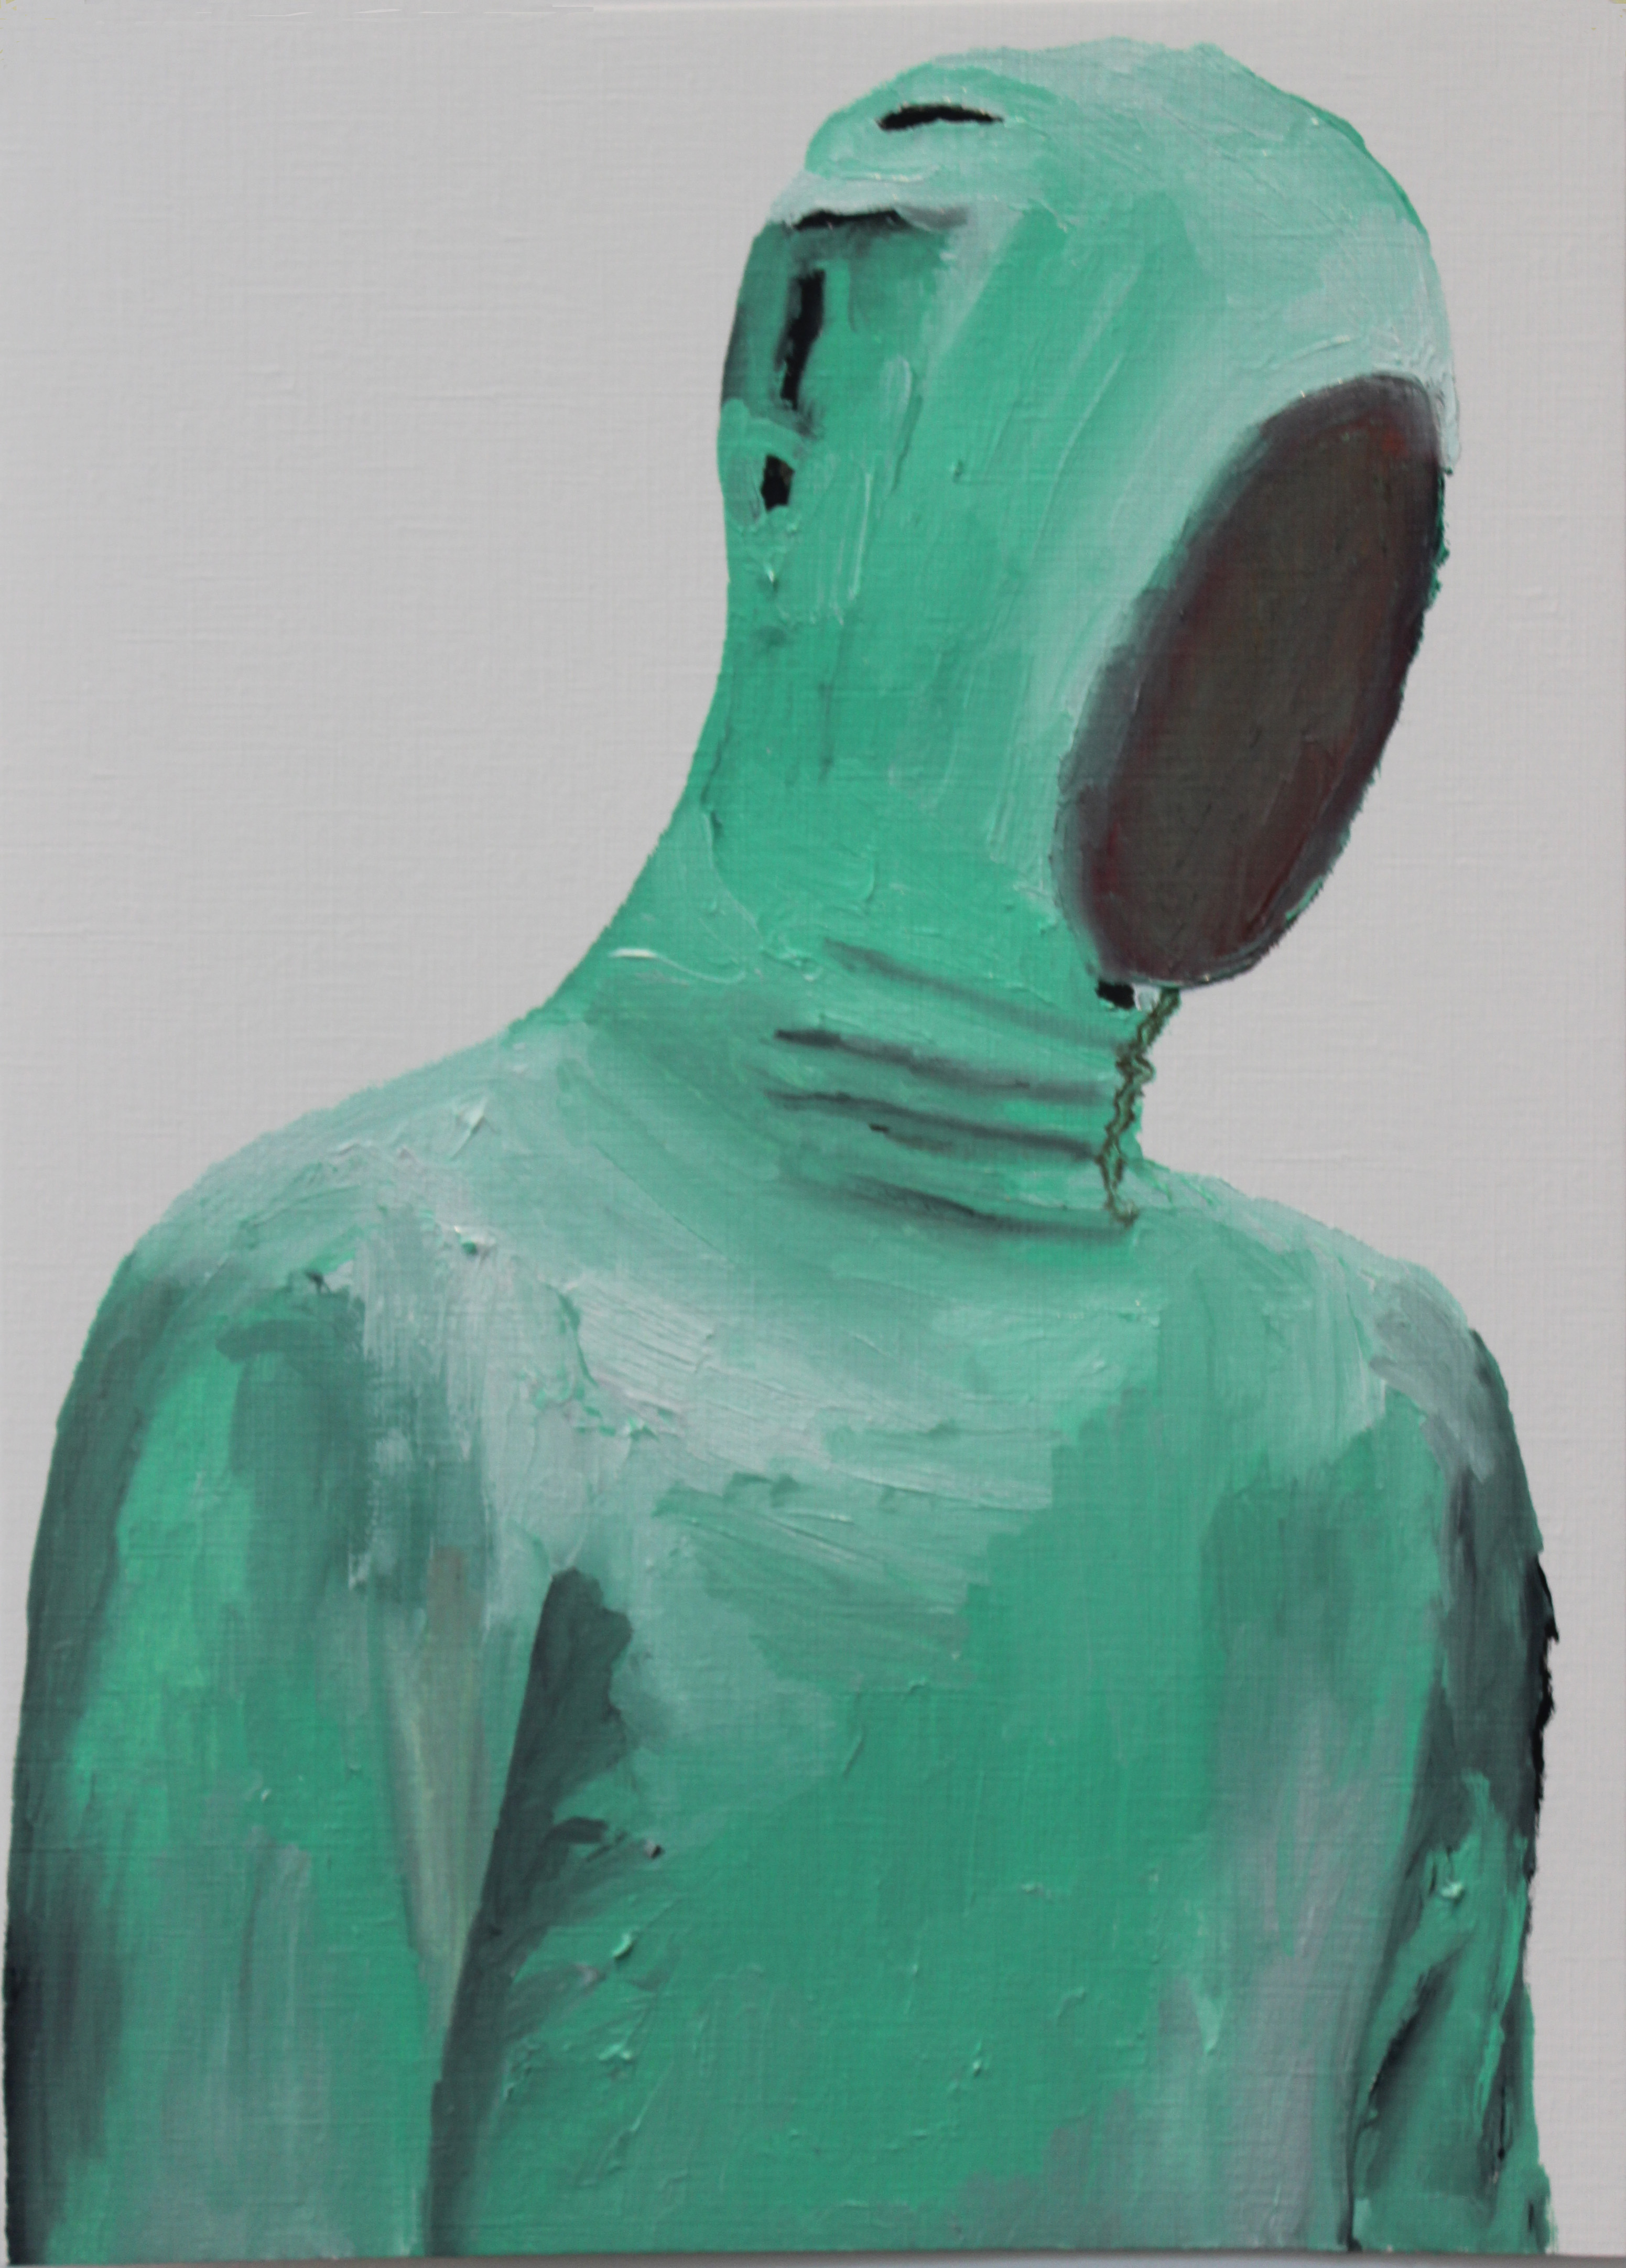 Greenscreen, 2016 - Oil on paper 24 x 33 cm